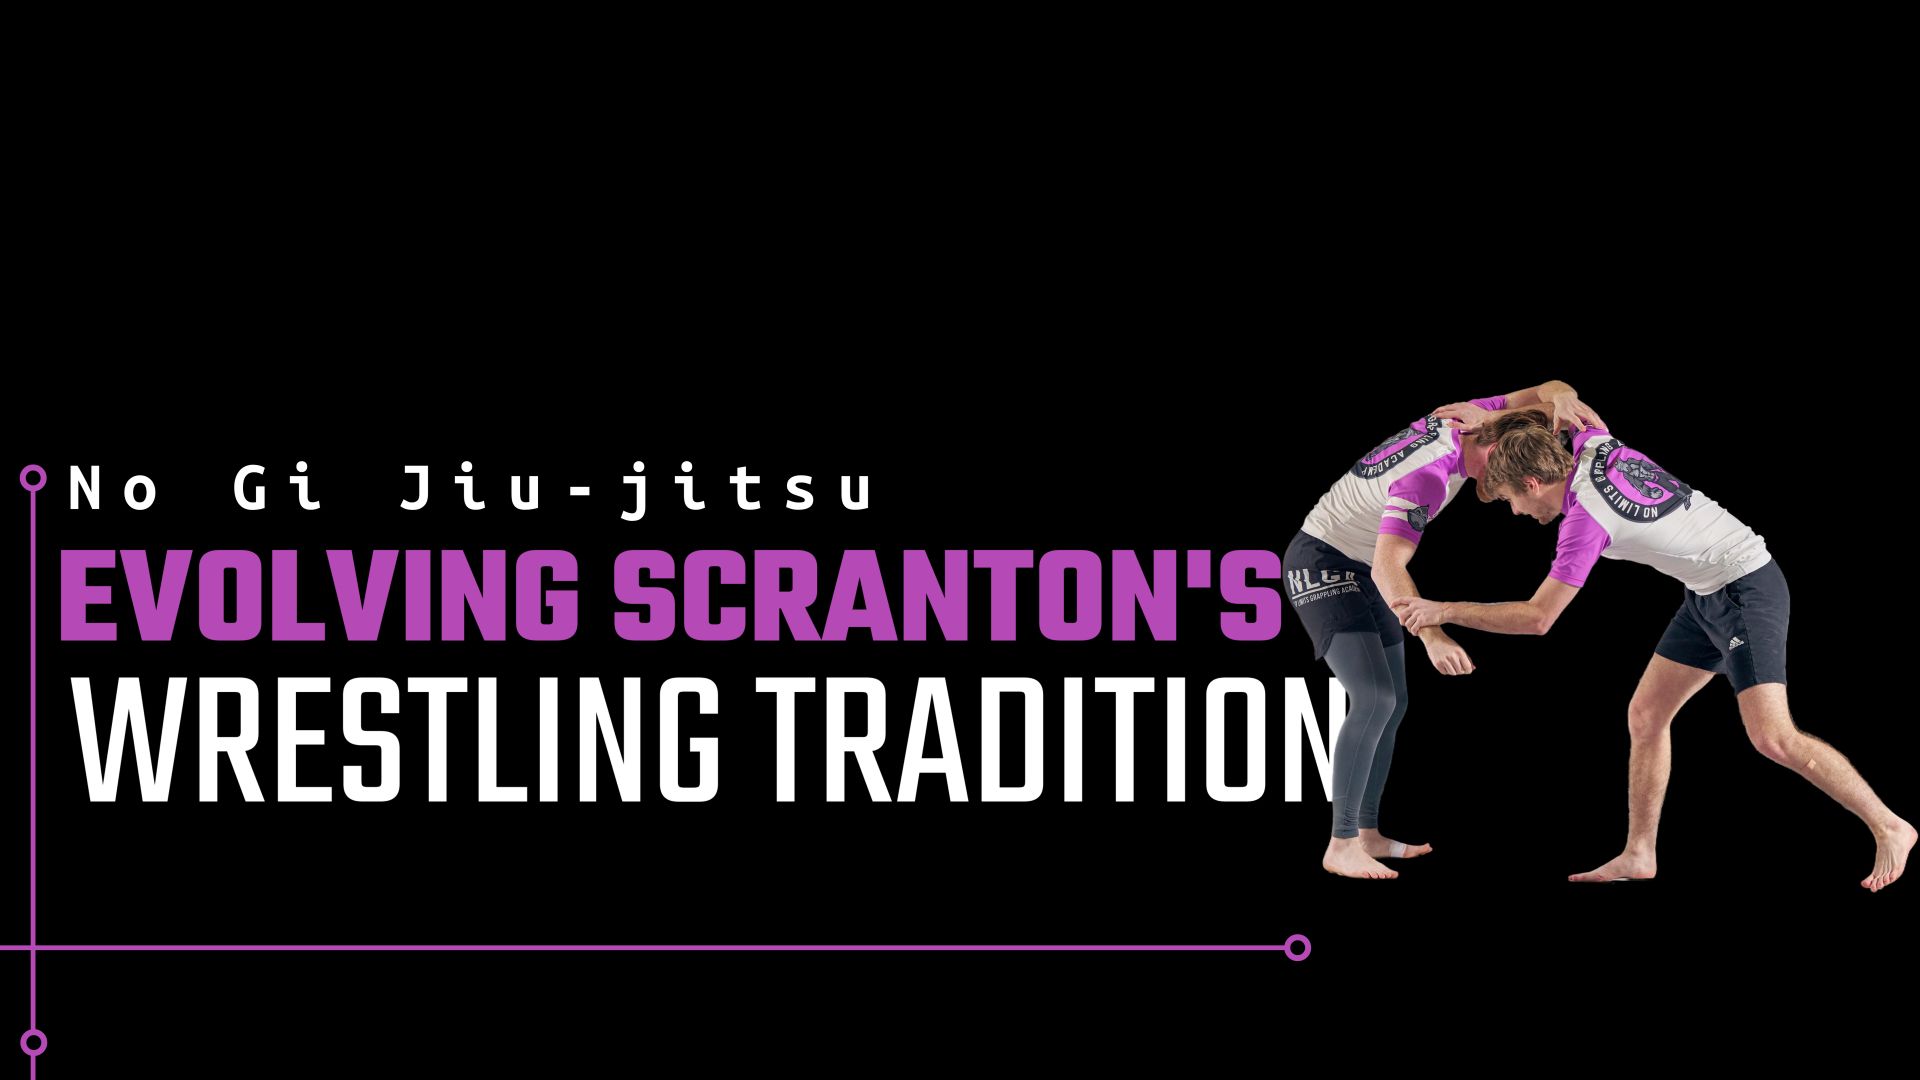 Jiu-jitsu and wrestling in Scranton